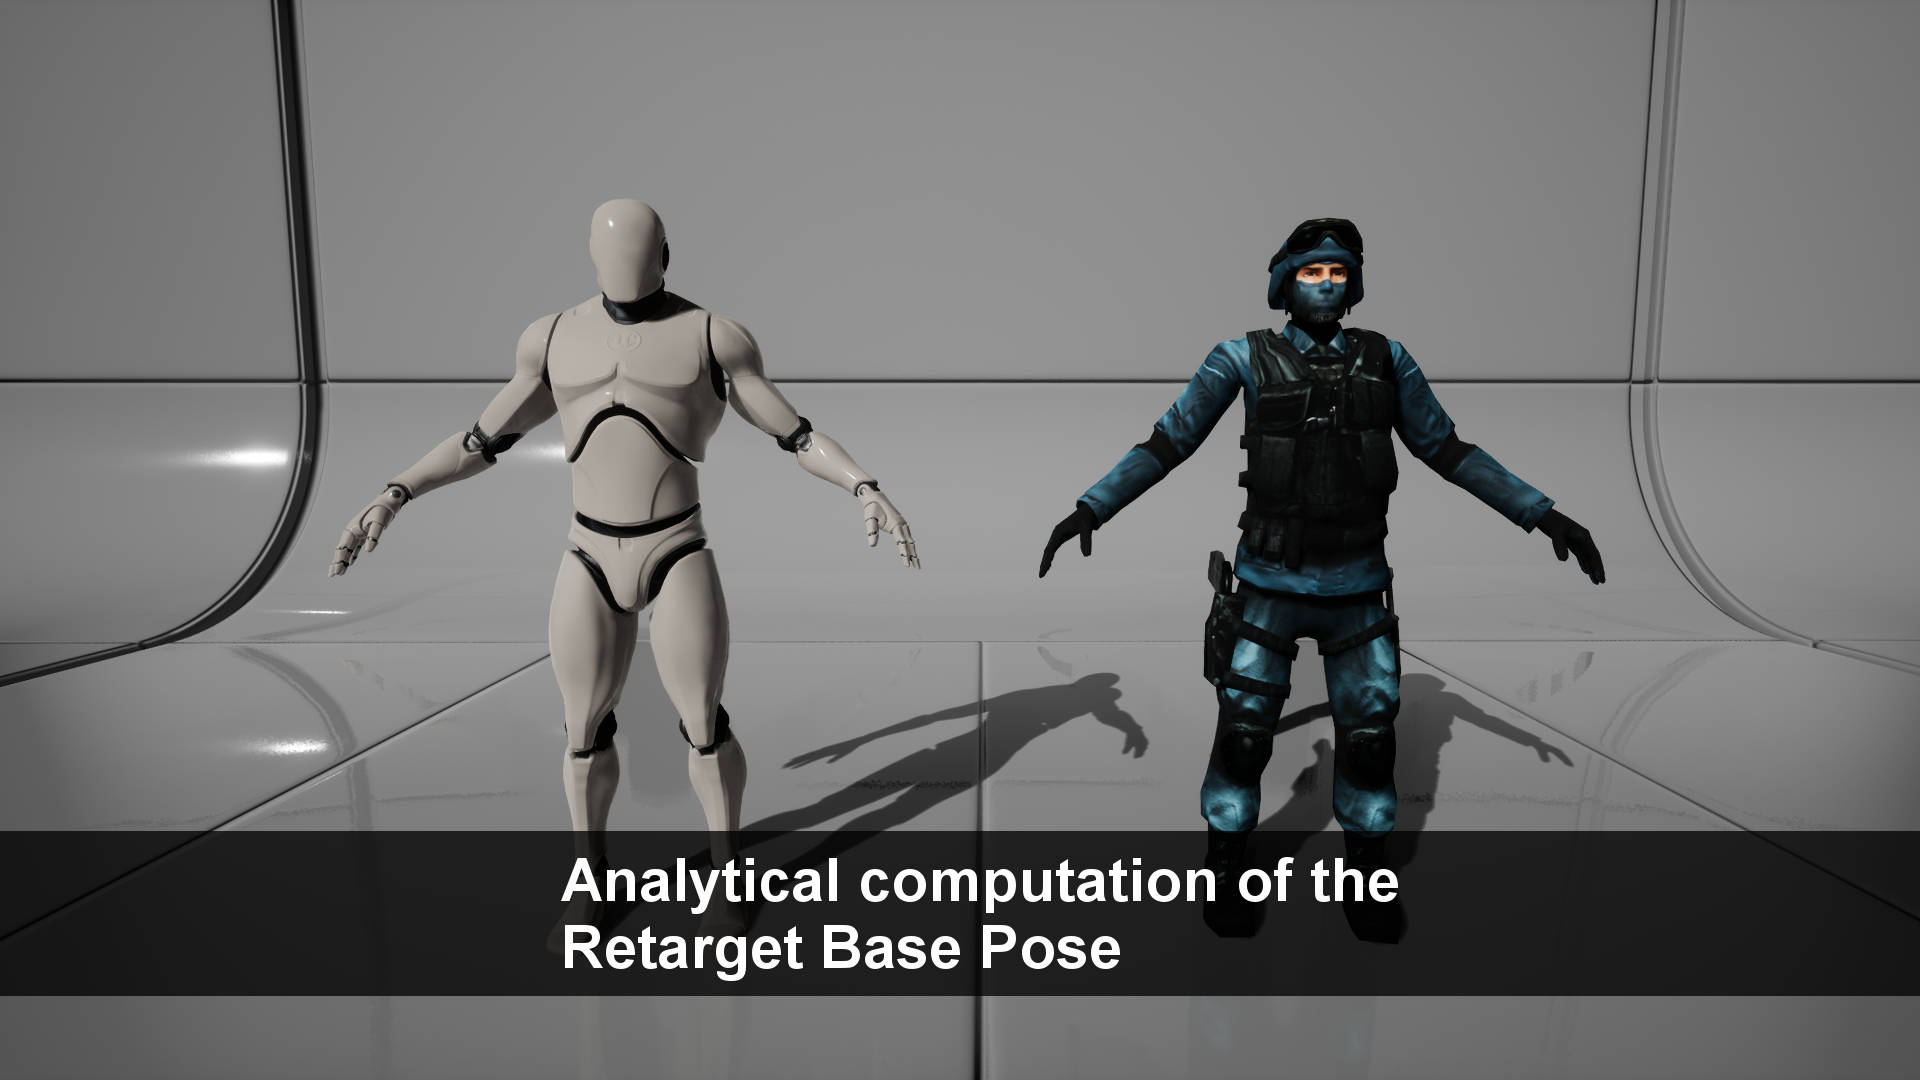 Automatic analytical computation of the Retarget Base Pose